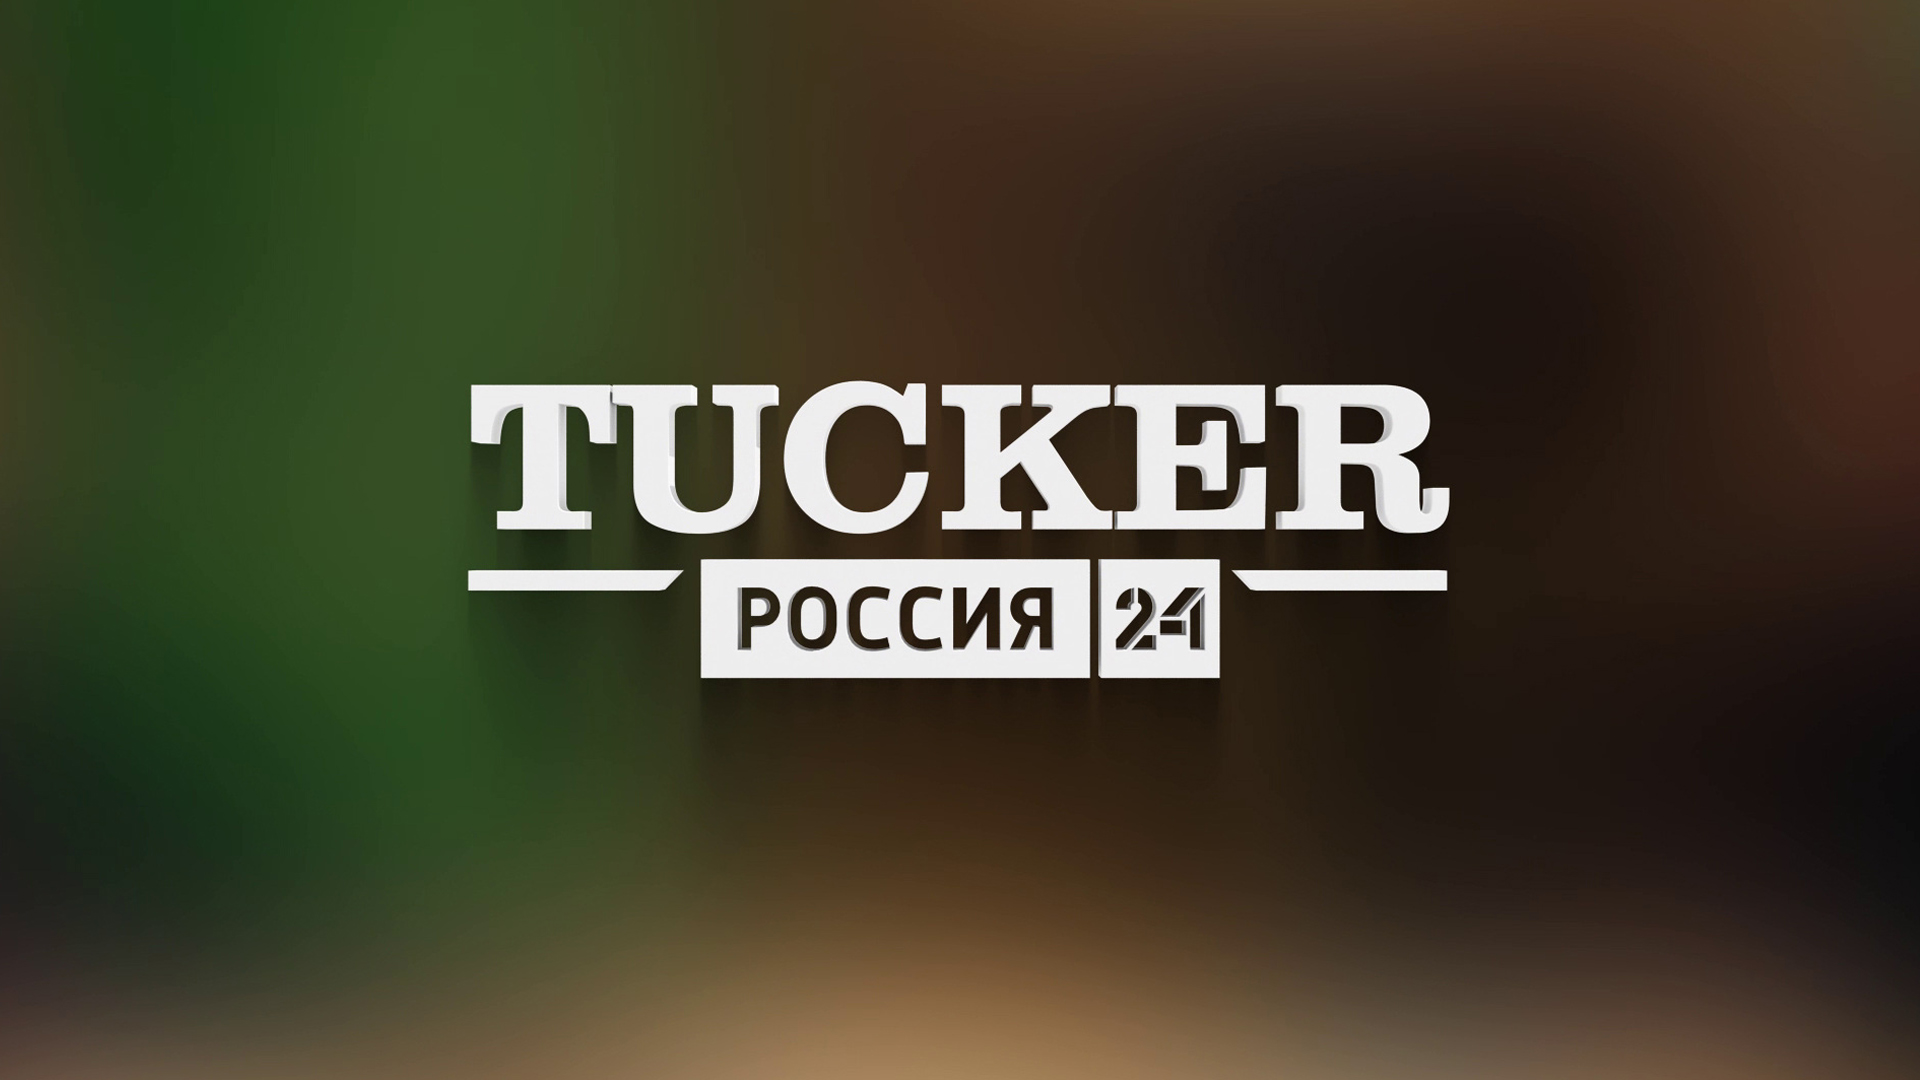 Tucker. Россия 24